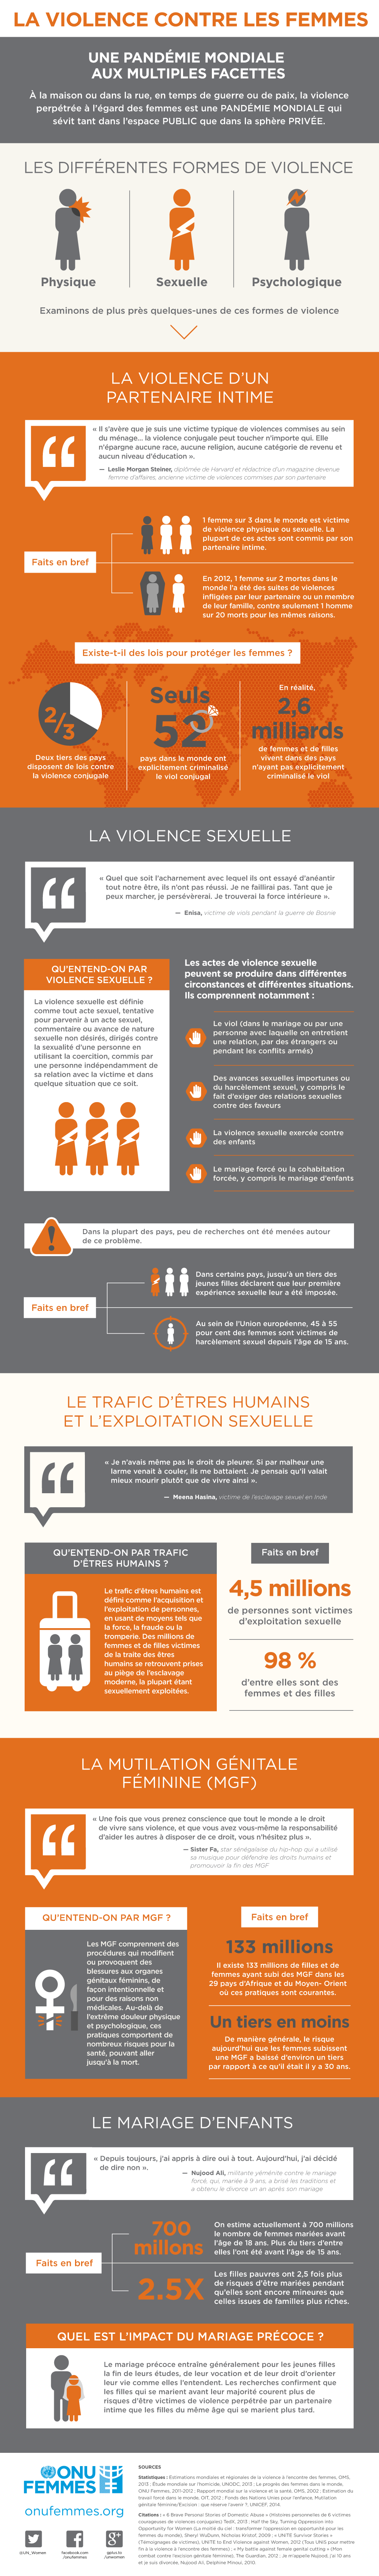 infographic-violence-against-women-fr